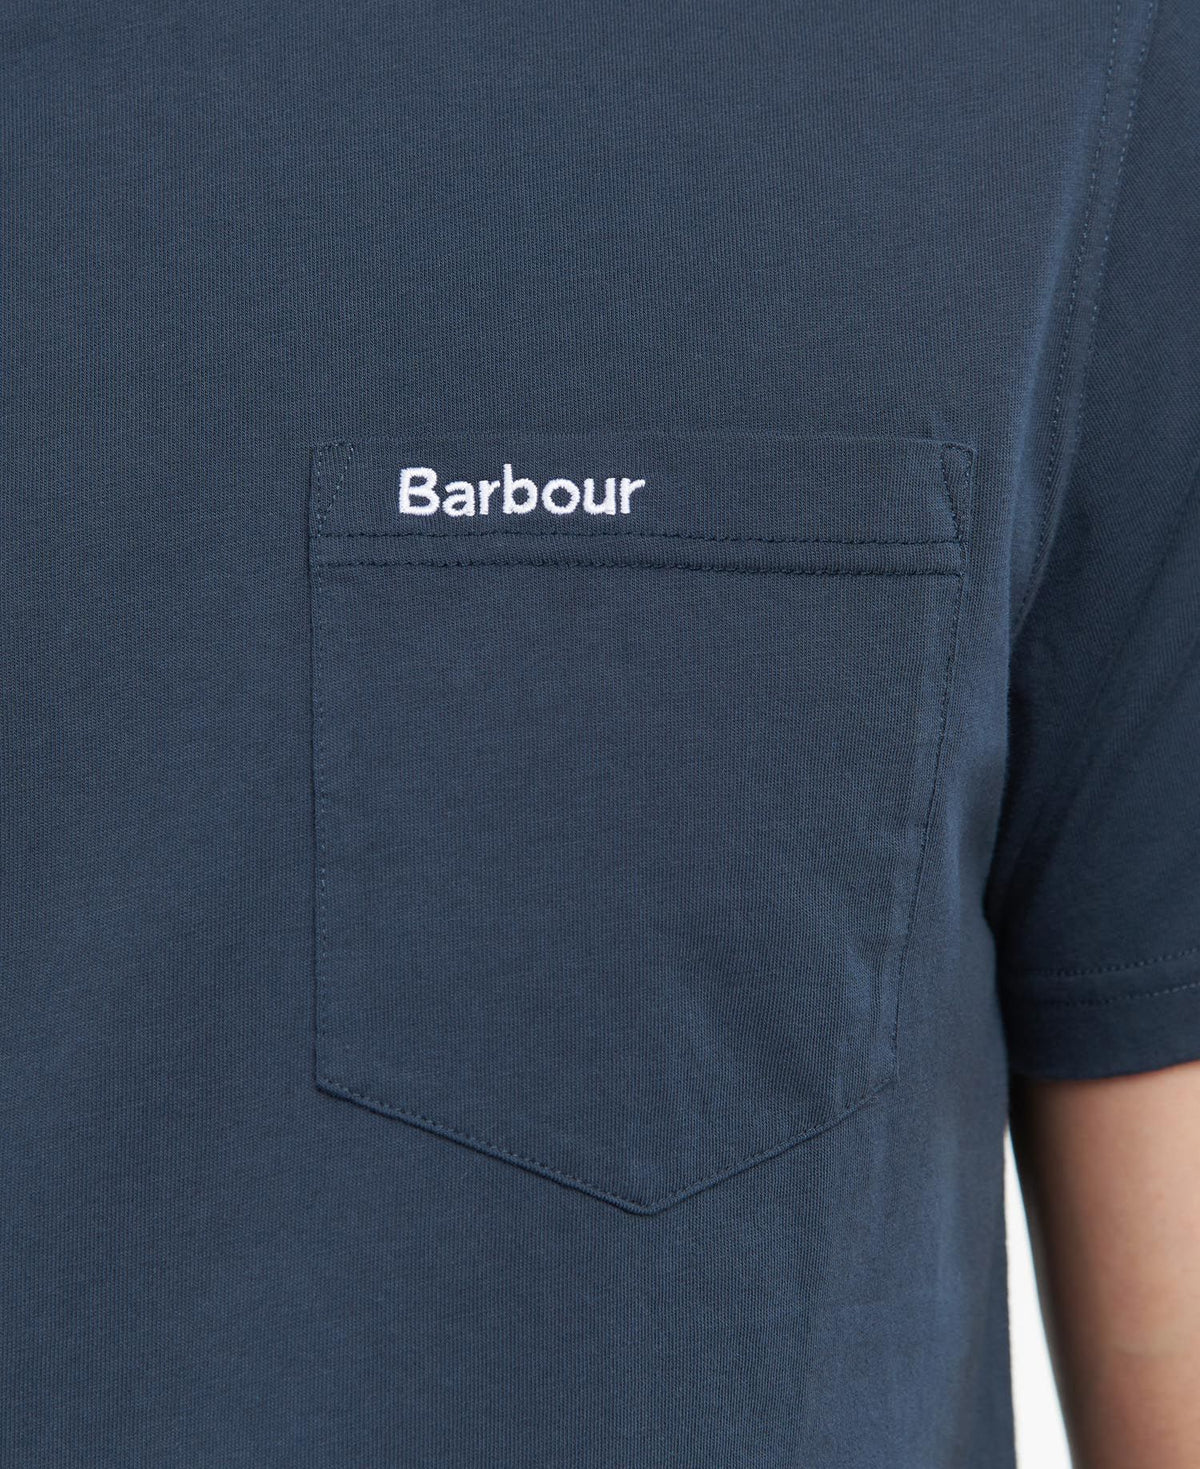 Barbour Mens 'Langdon' Pocket T-Shirt, 06, Mts1114, Navy